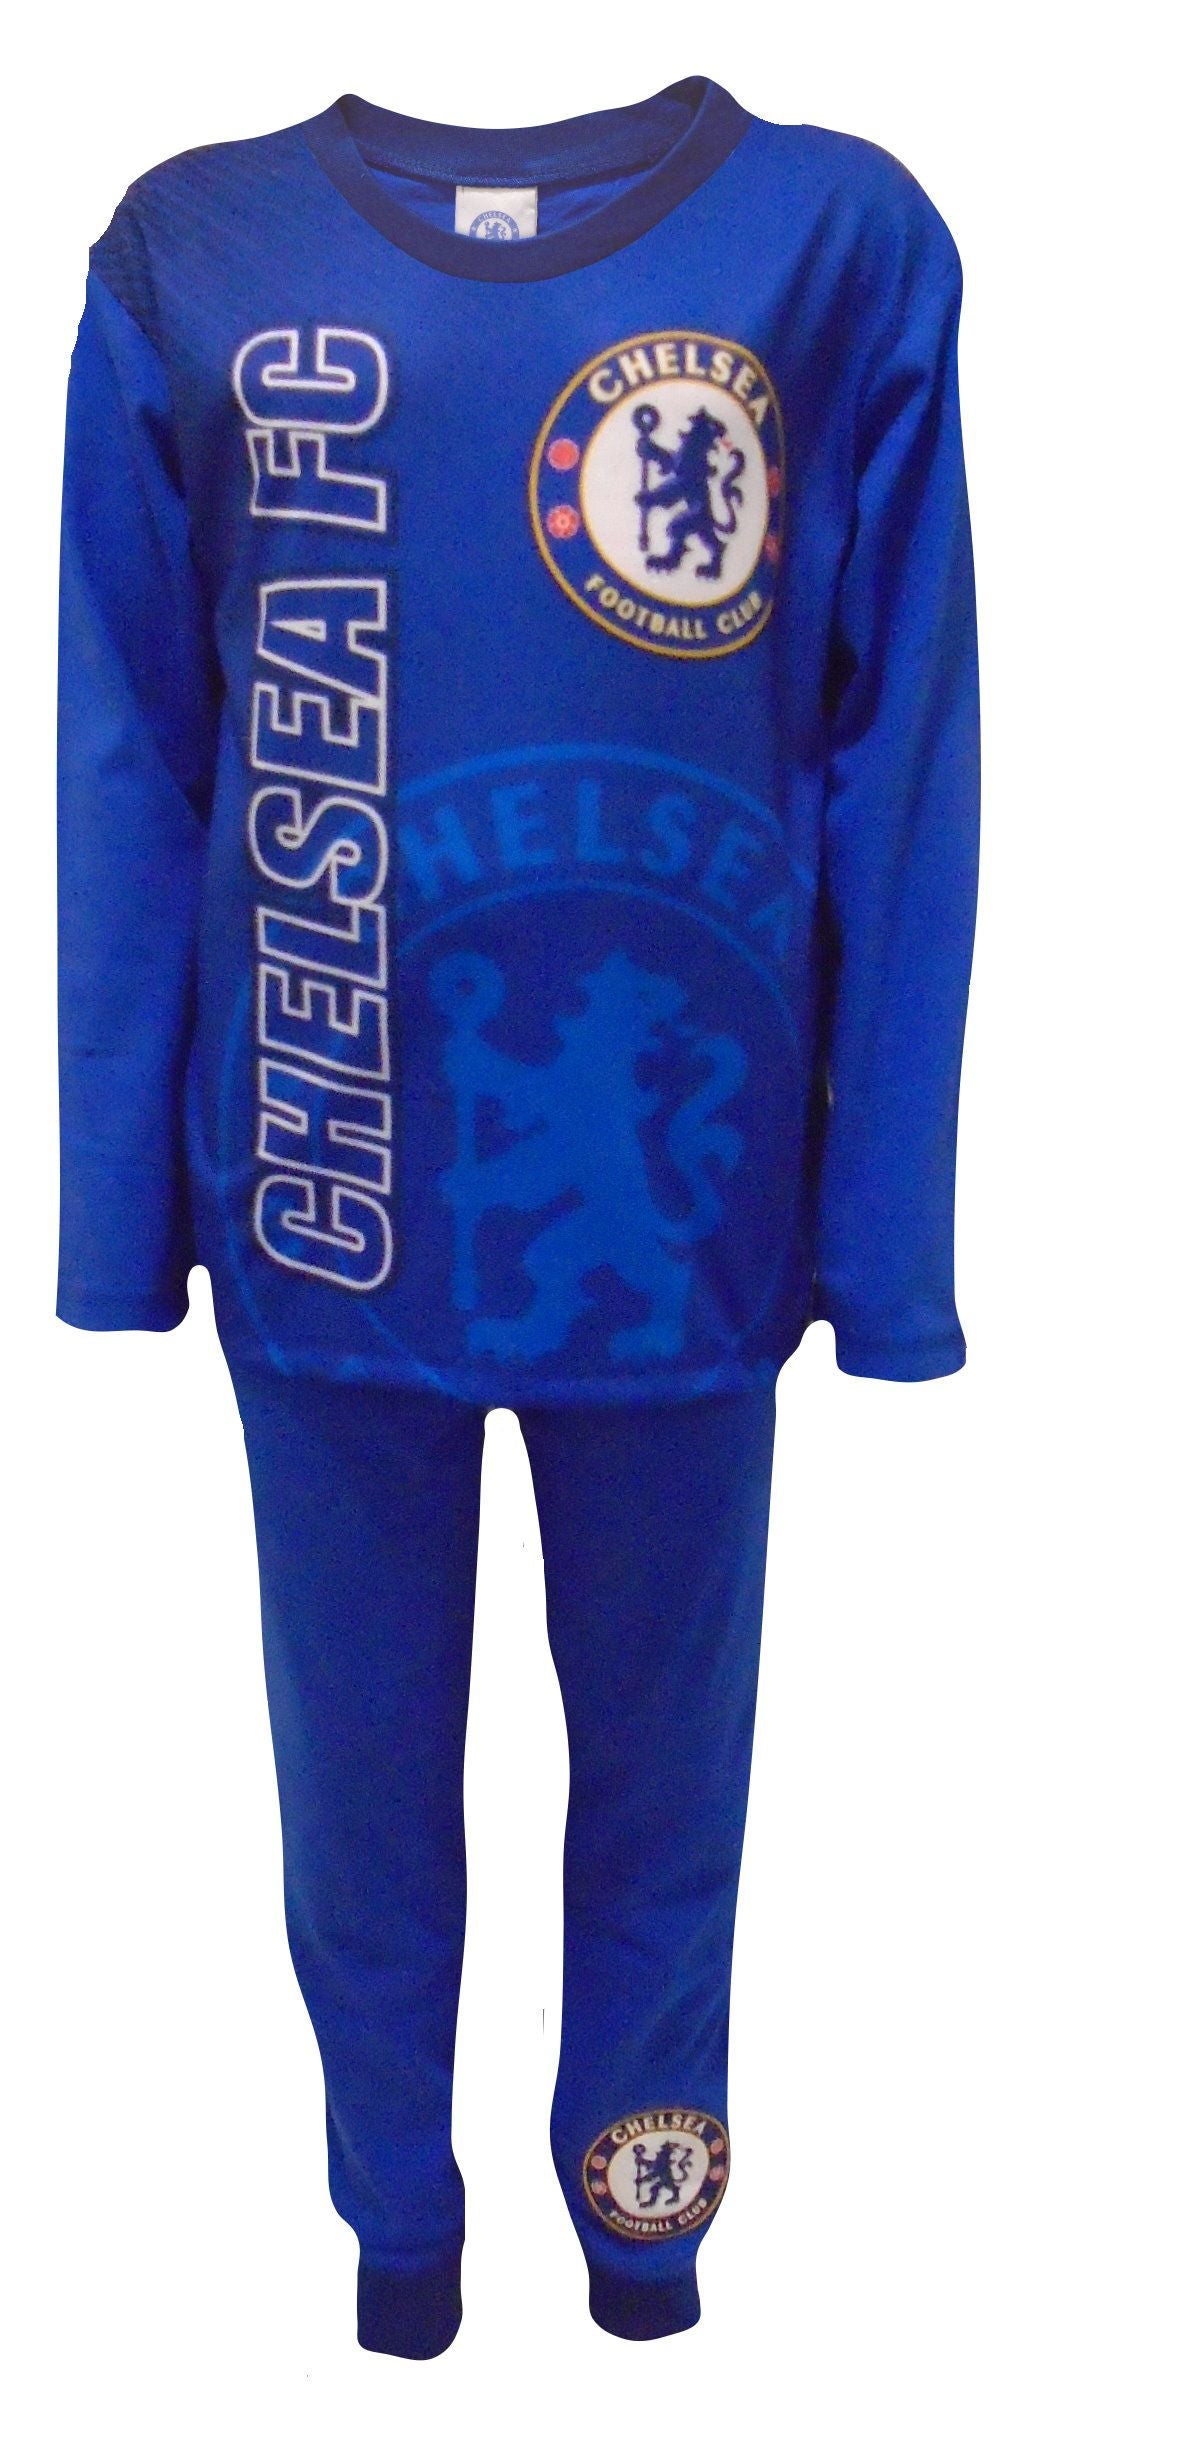 Cheslea Football Club "2019" Boys Pyjamas